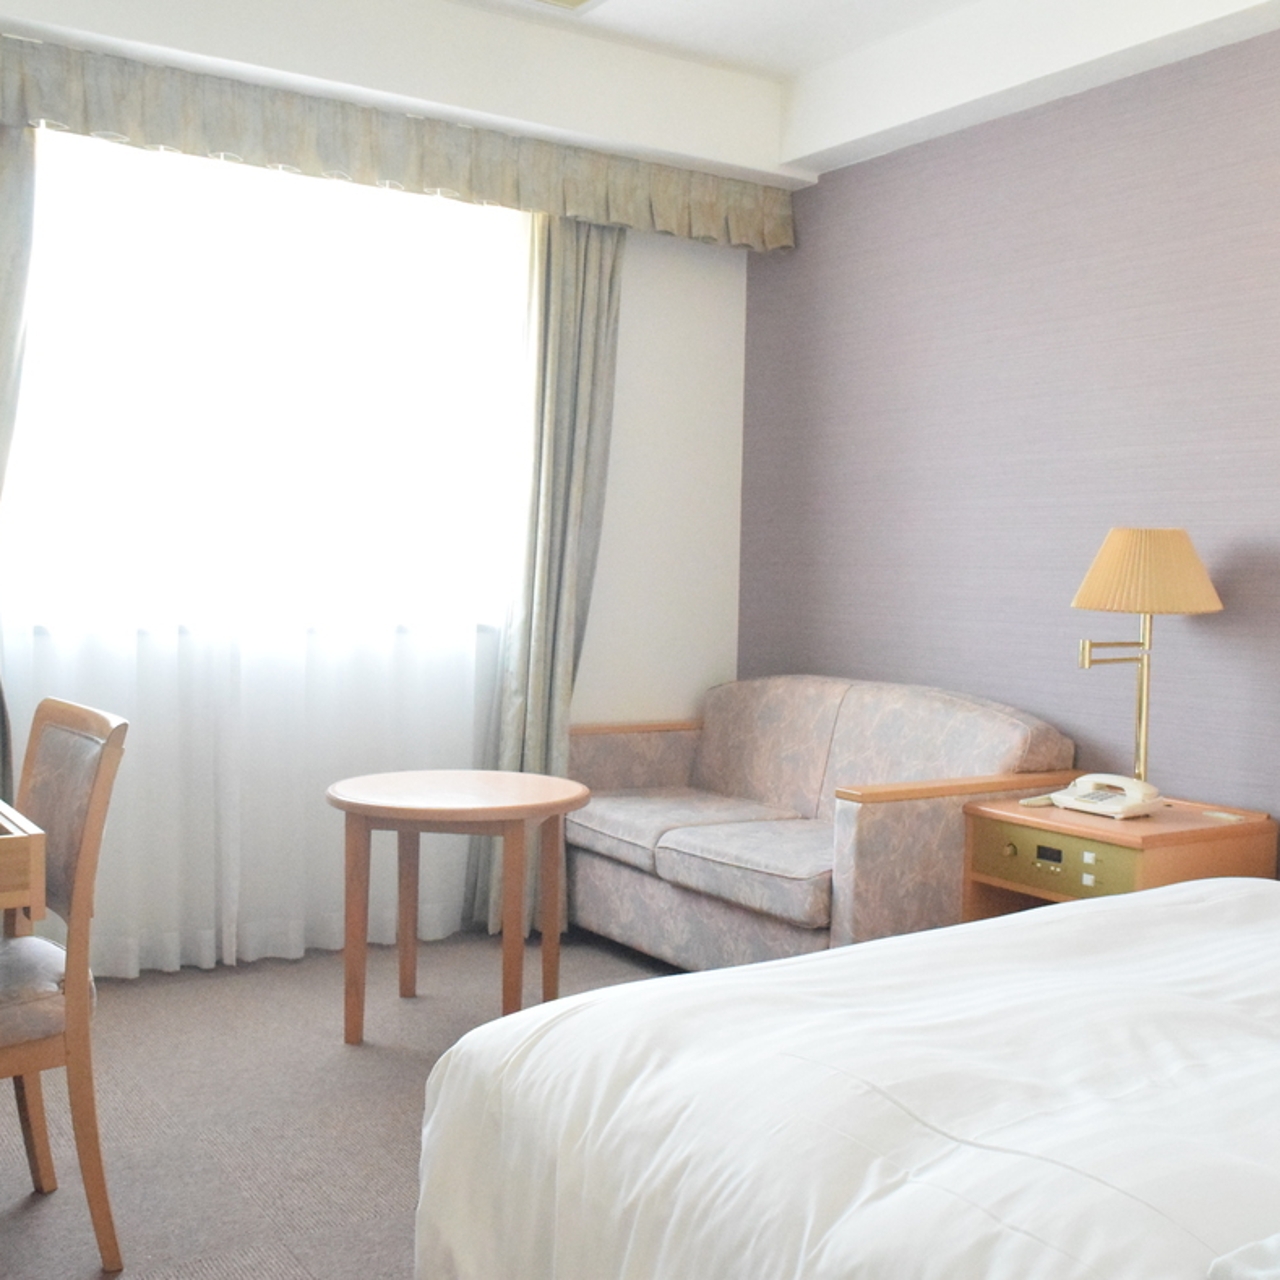 Kochi Japan Hotel – Bright Park Hotel